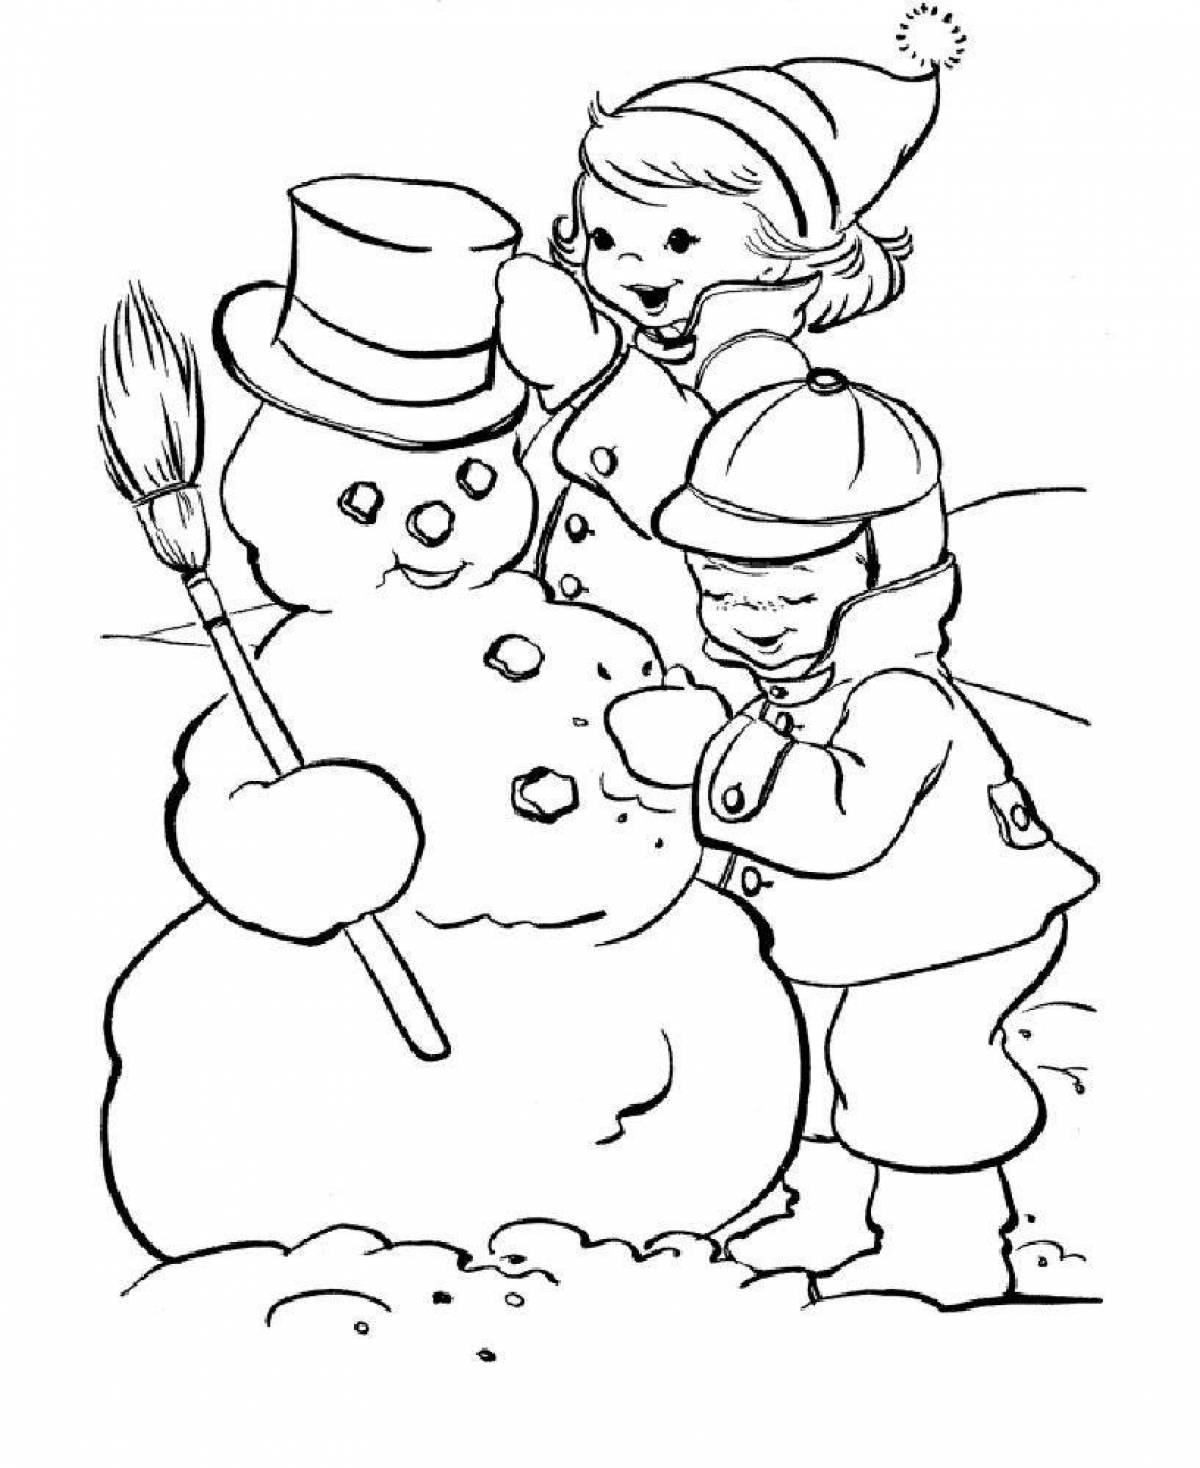 Детский рисунок дети лепят снеговика (44 фото)